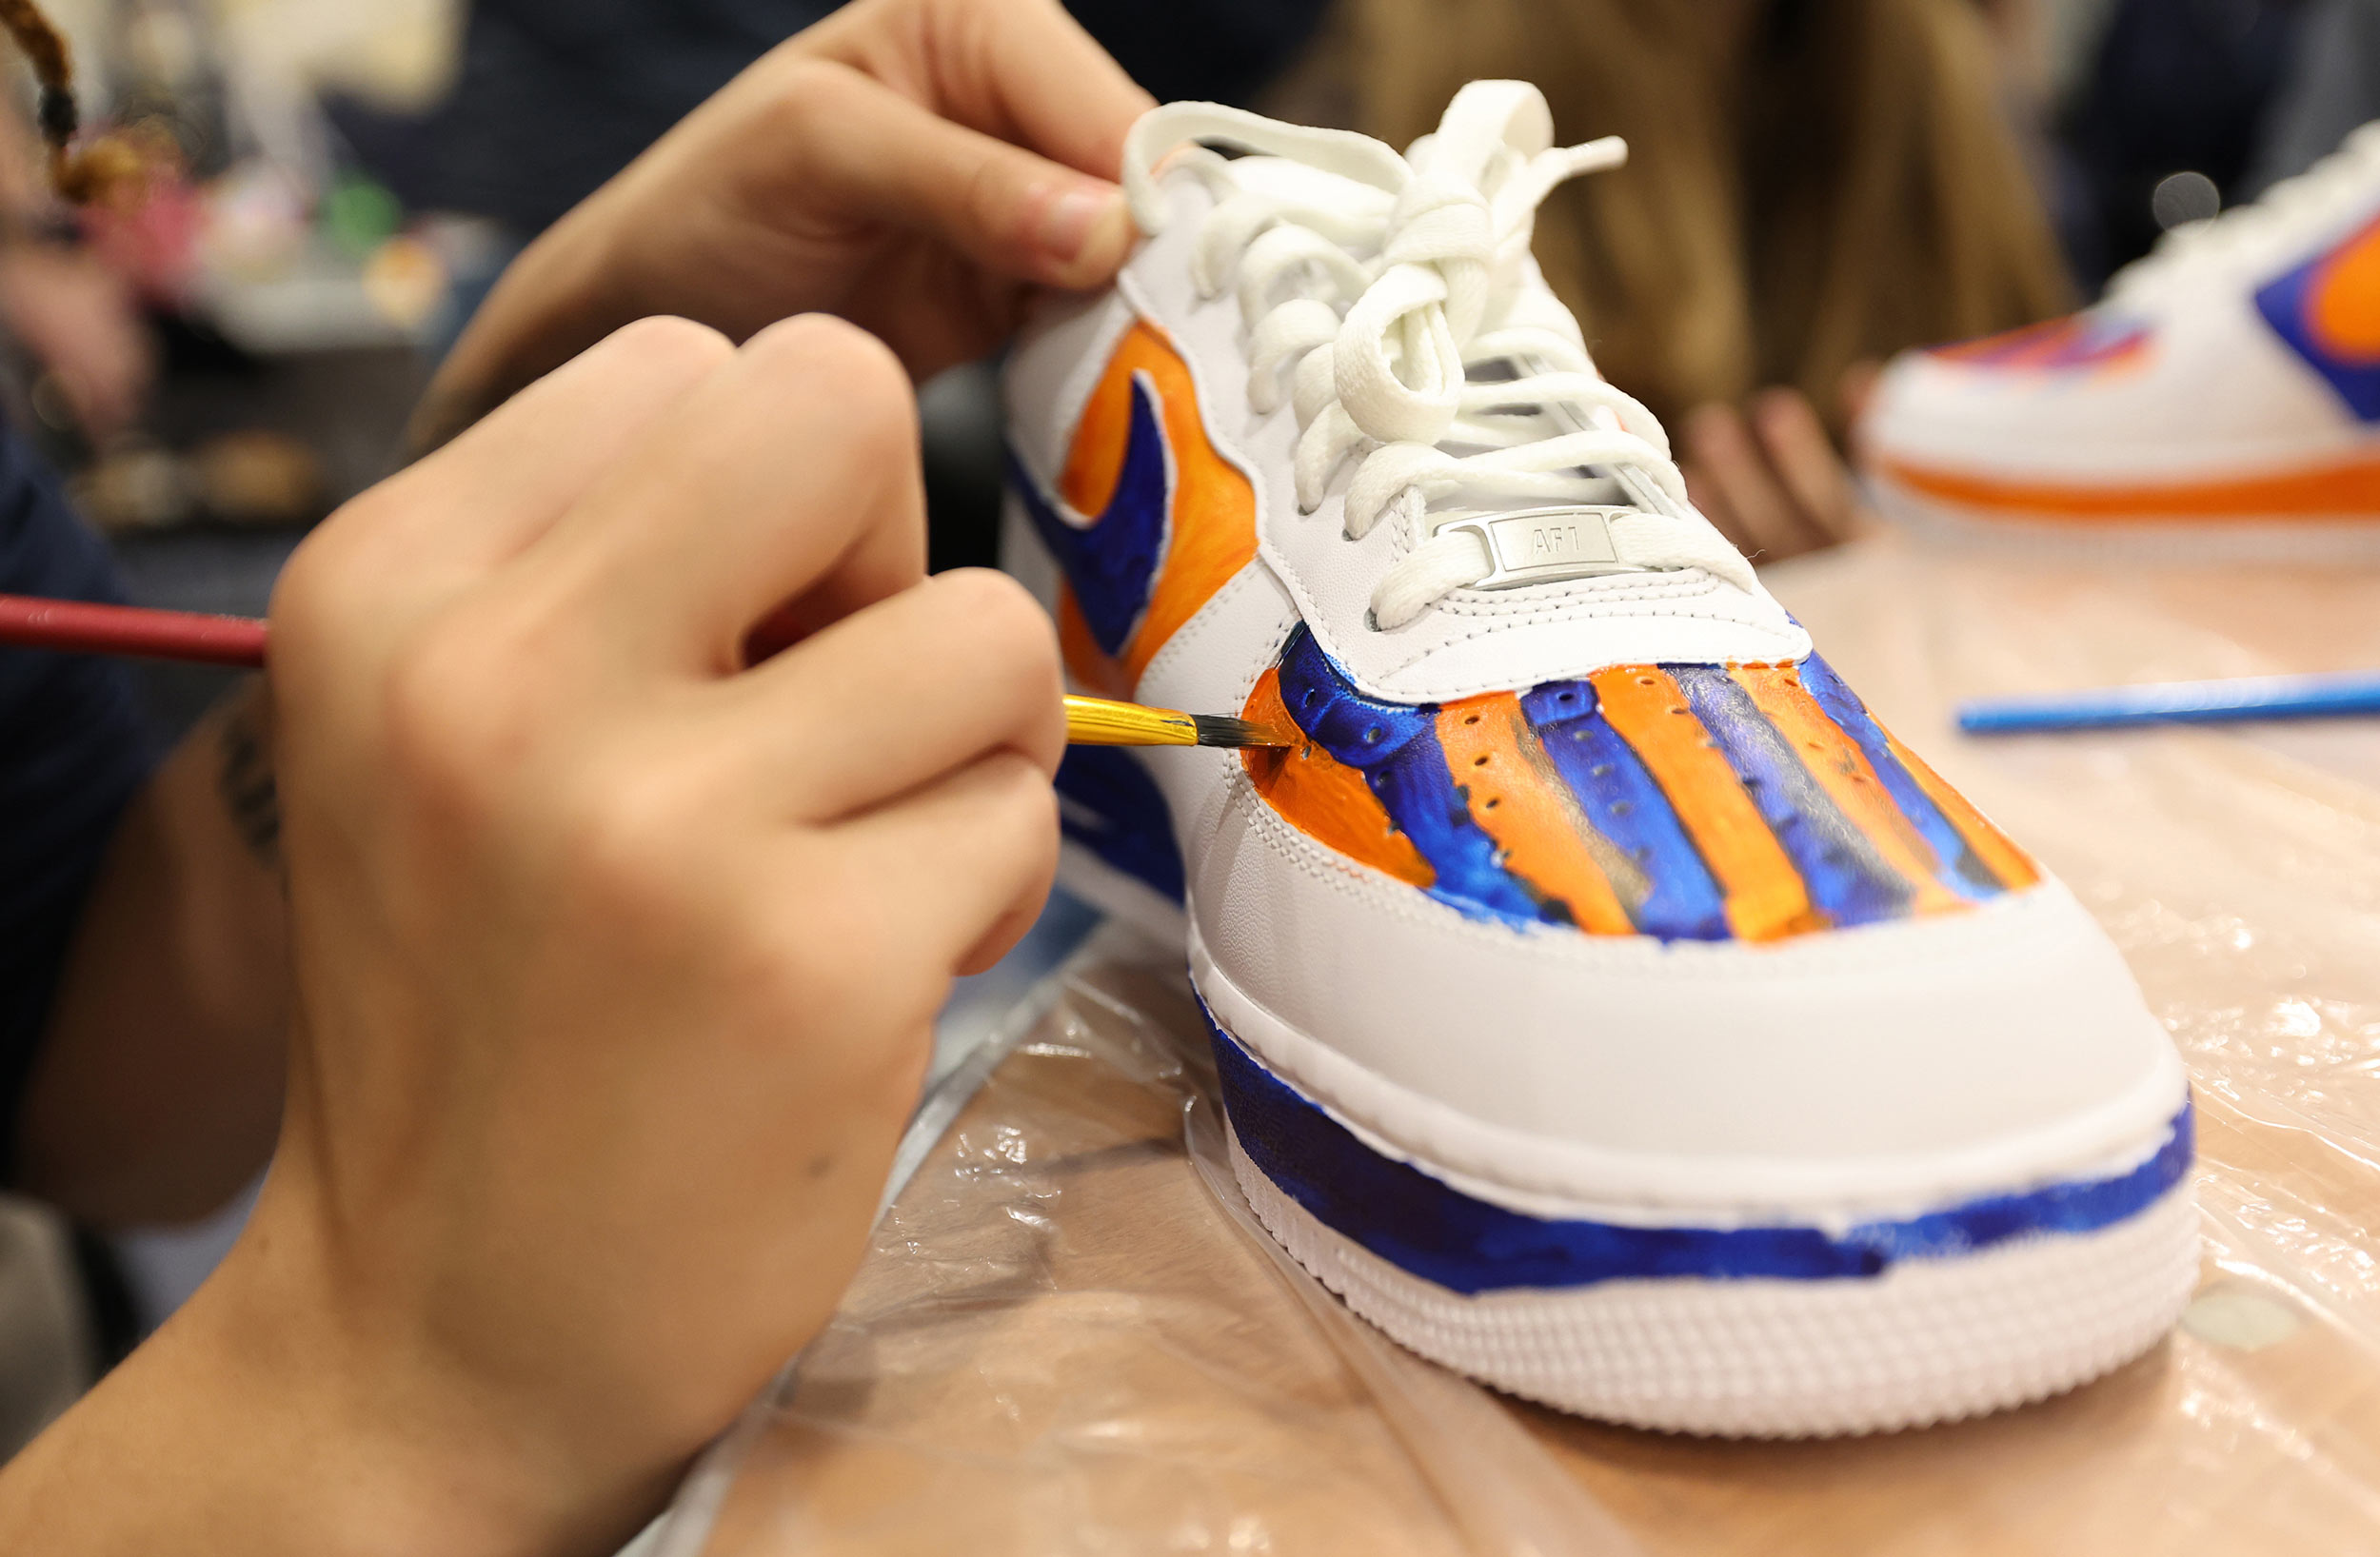 Blue and Orange stripe paint job on a shoe